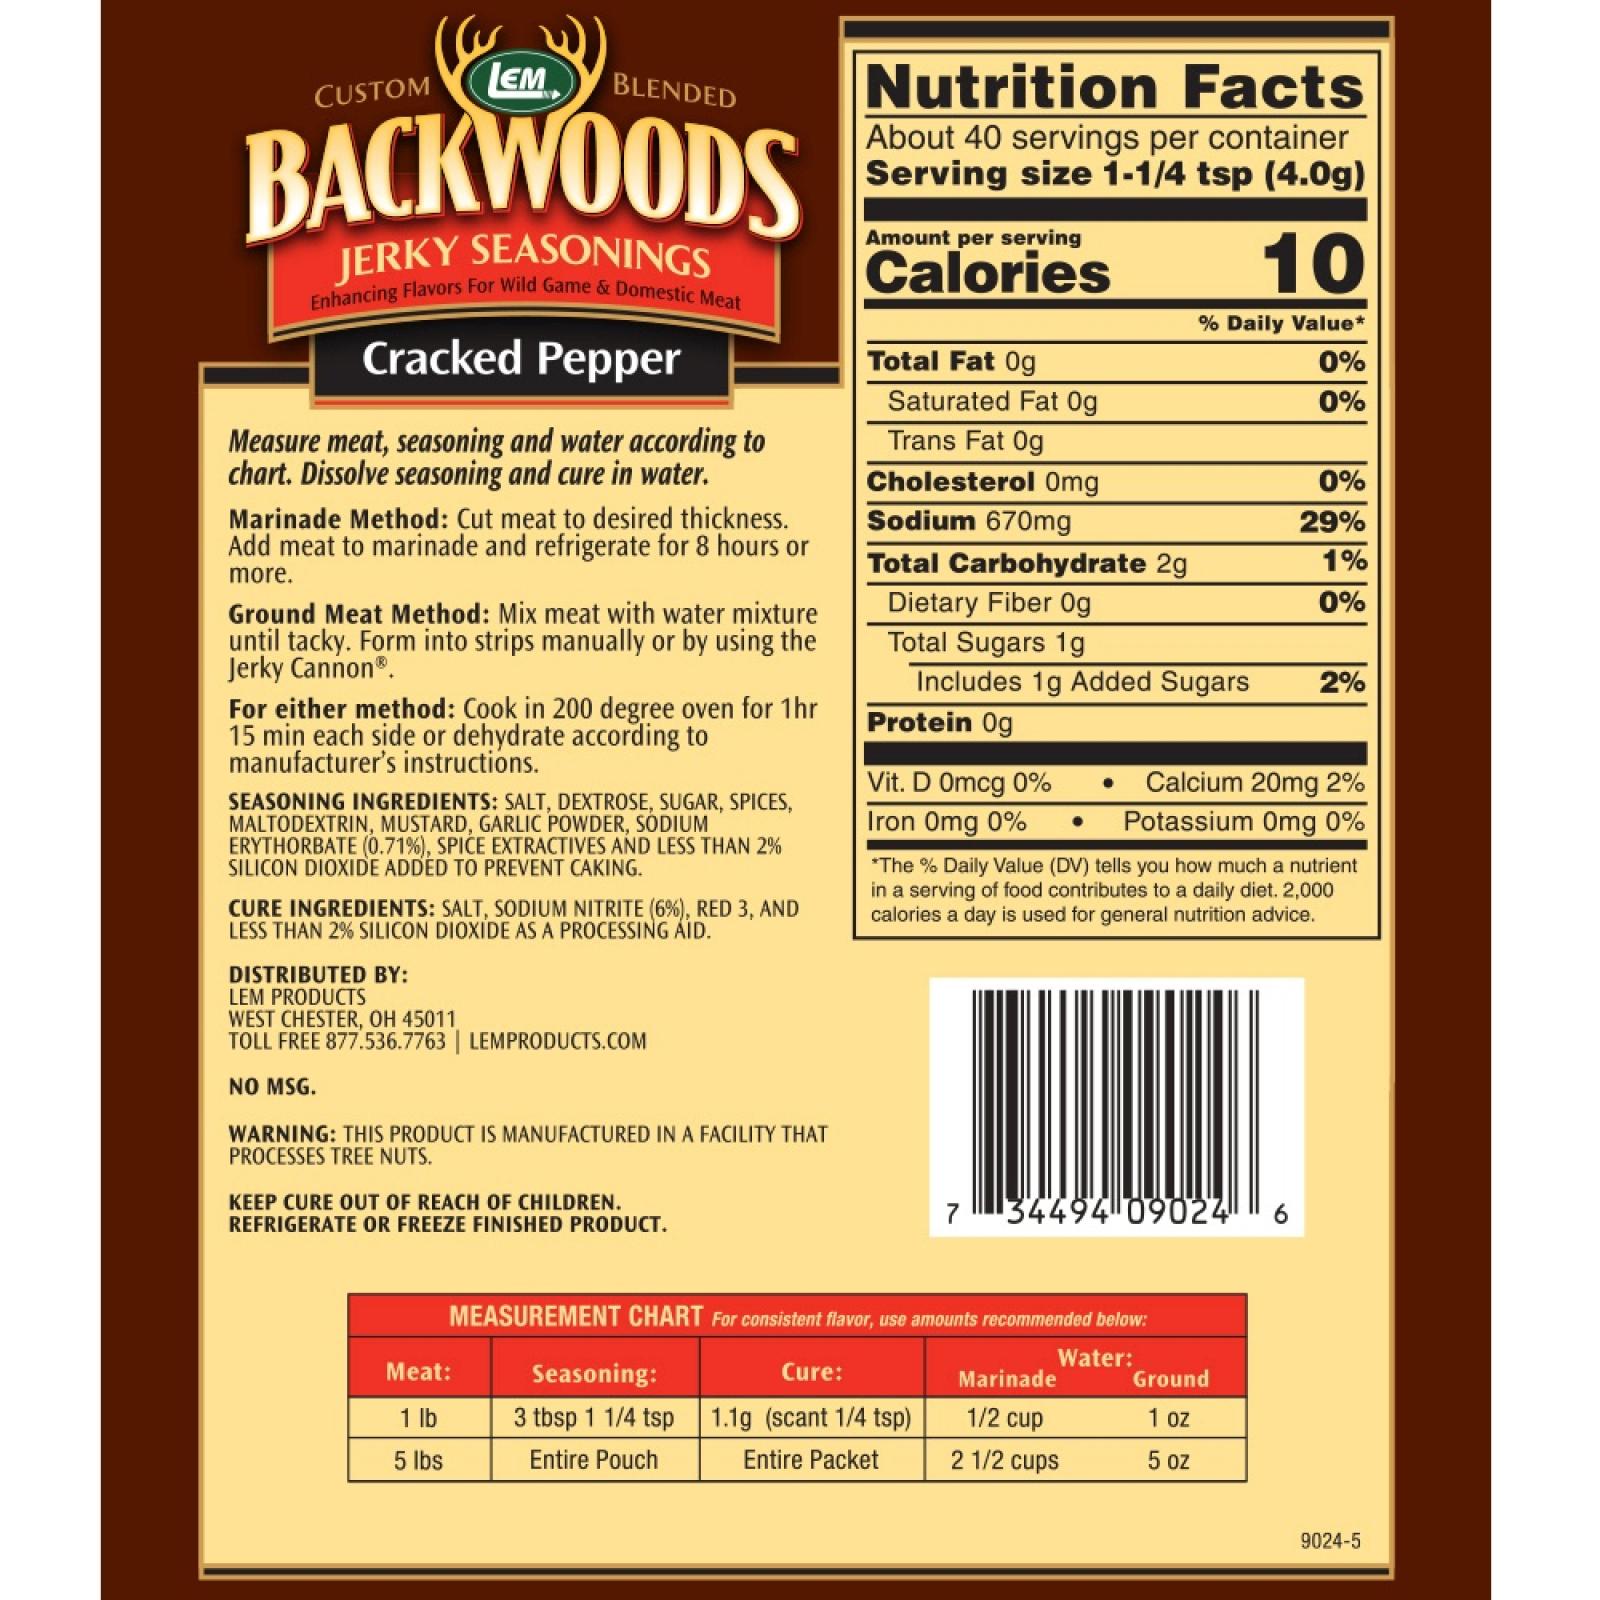 LEM Backwoods Cracked Pepper Jerky Seasonings 5lbs